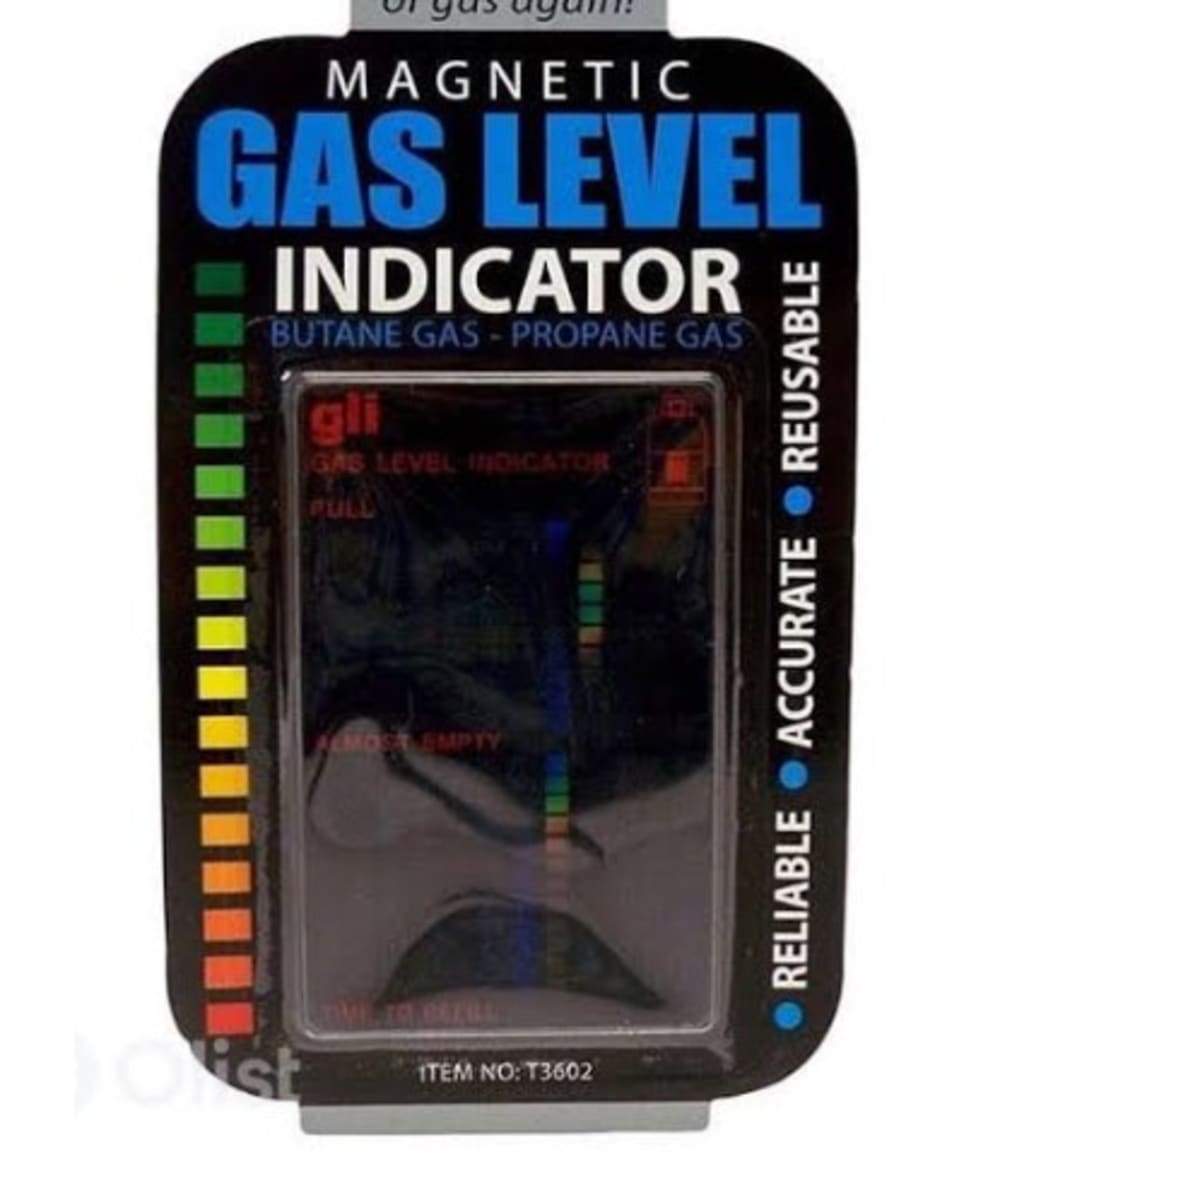 Magnetic gas level indicator